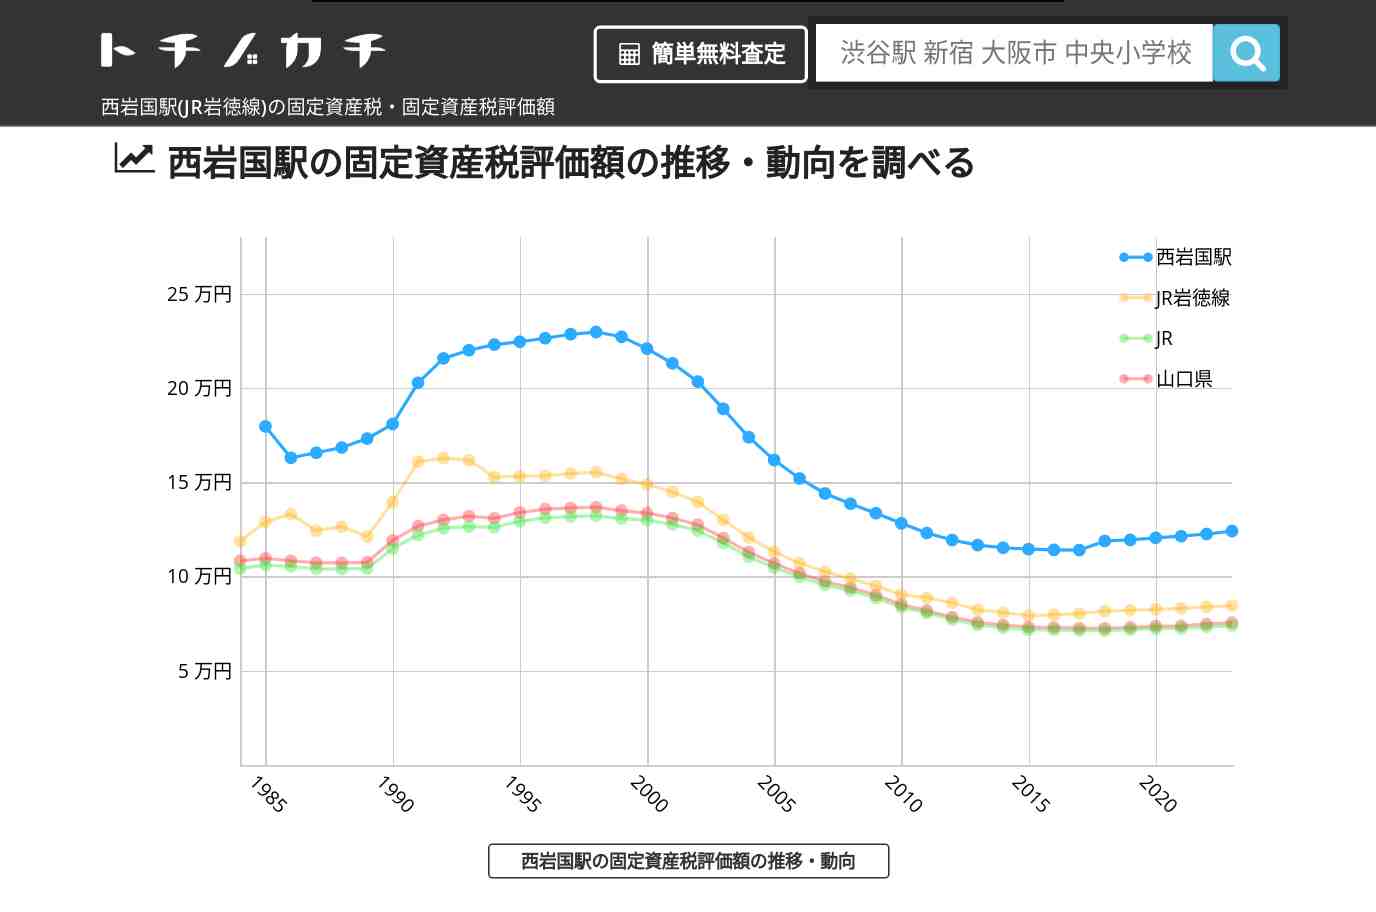 西岩国駅(JR岩徳線)の固定資産税・固定資産税評価額 | トチノカチ